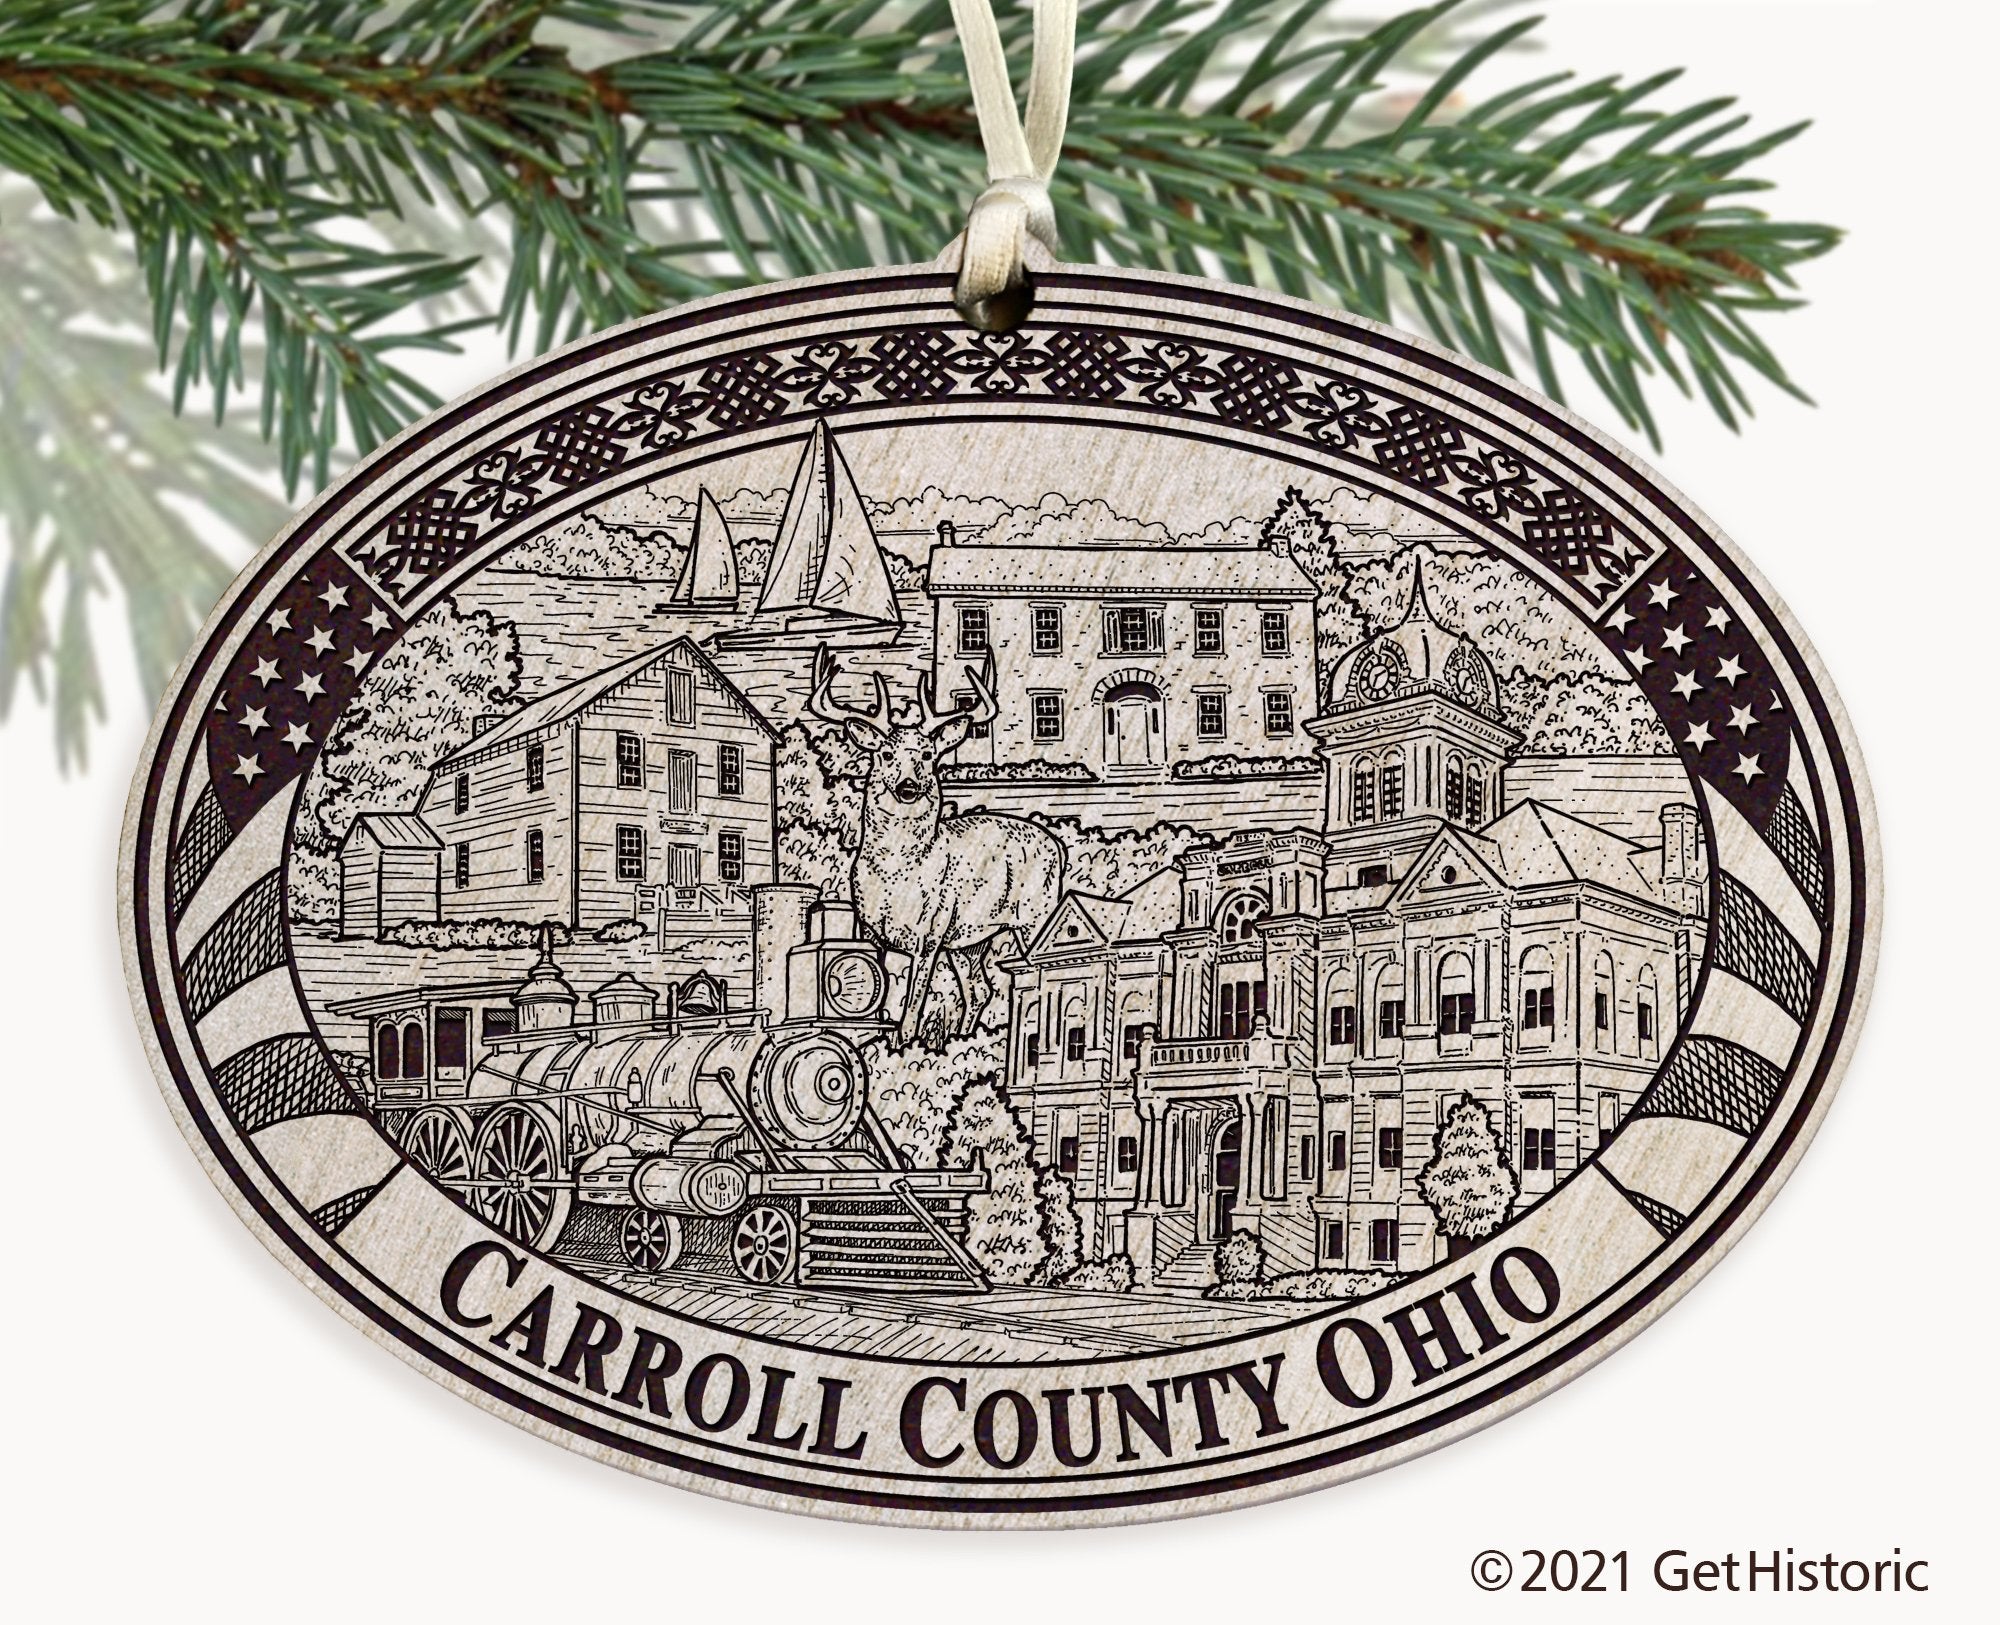 Carroll County Ohio Engraved Ornament